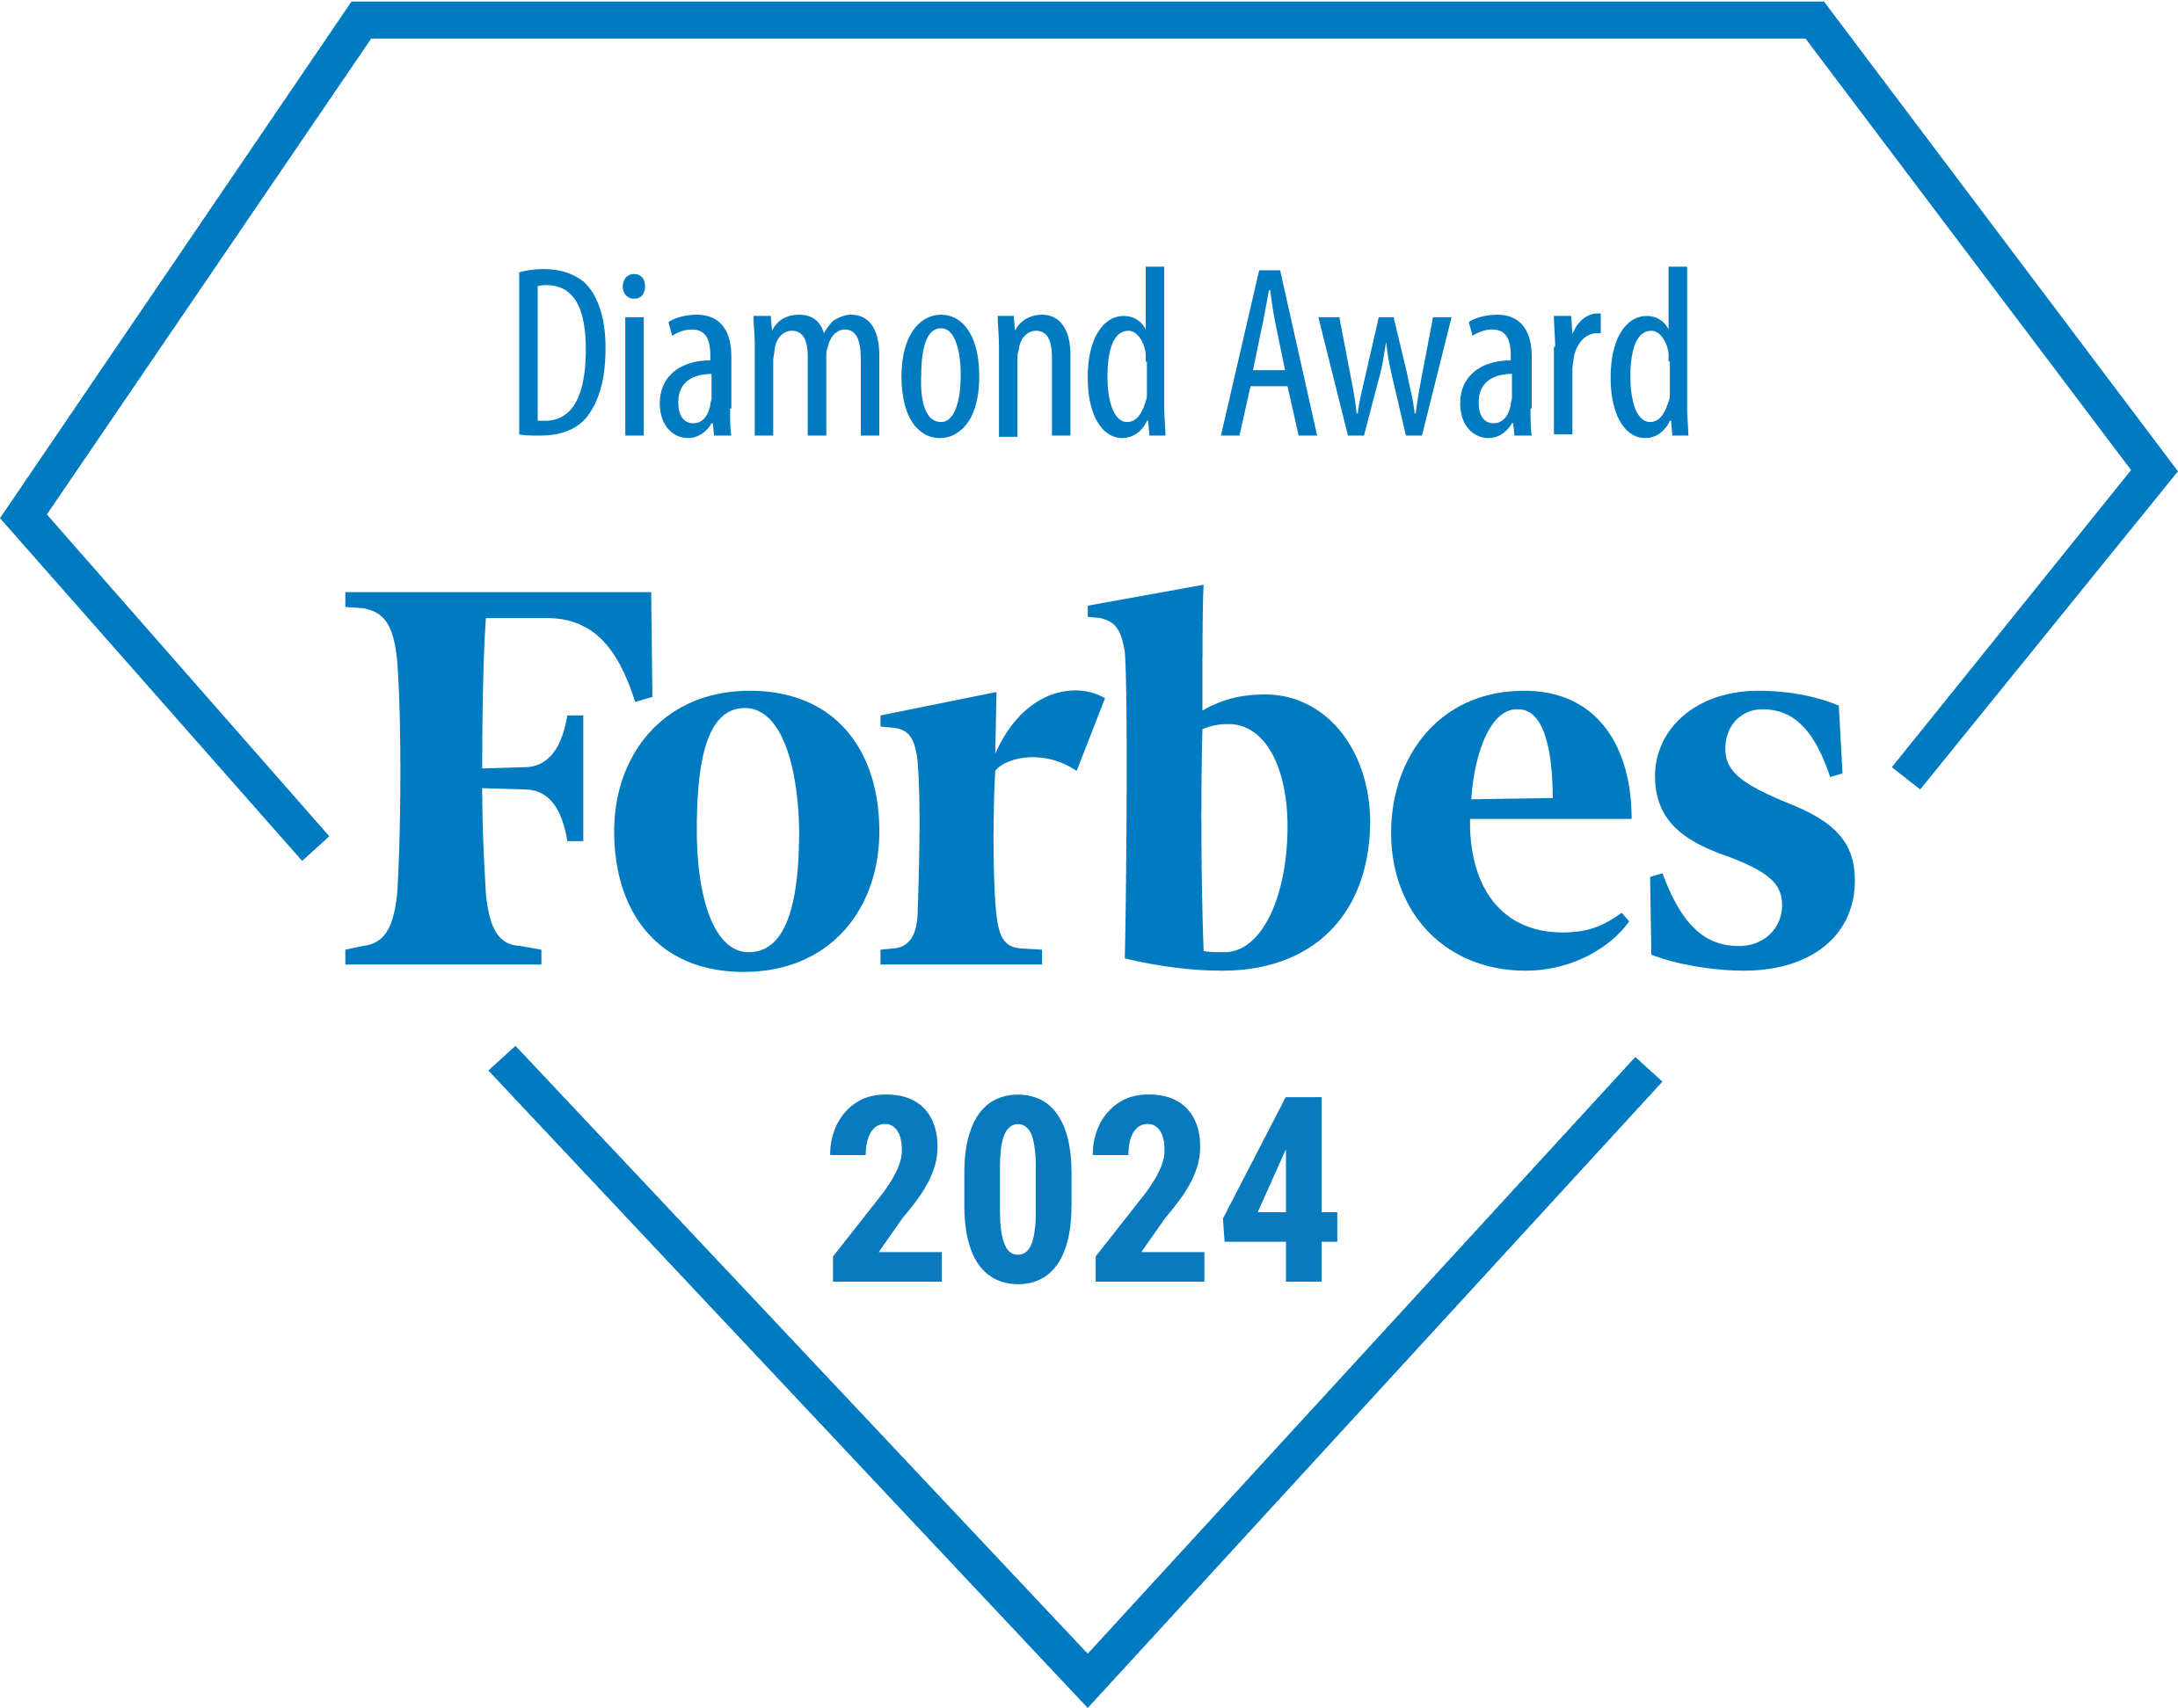 Forbes 2024 award